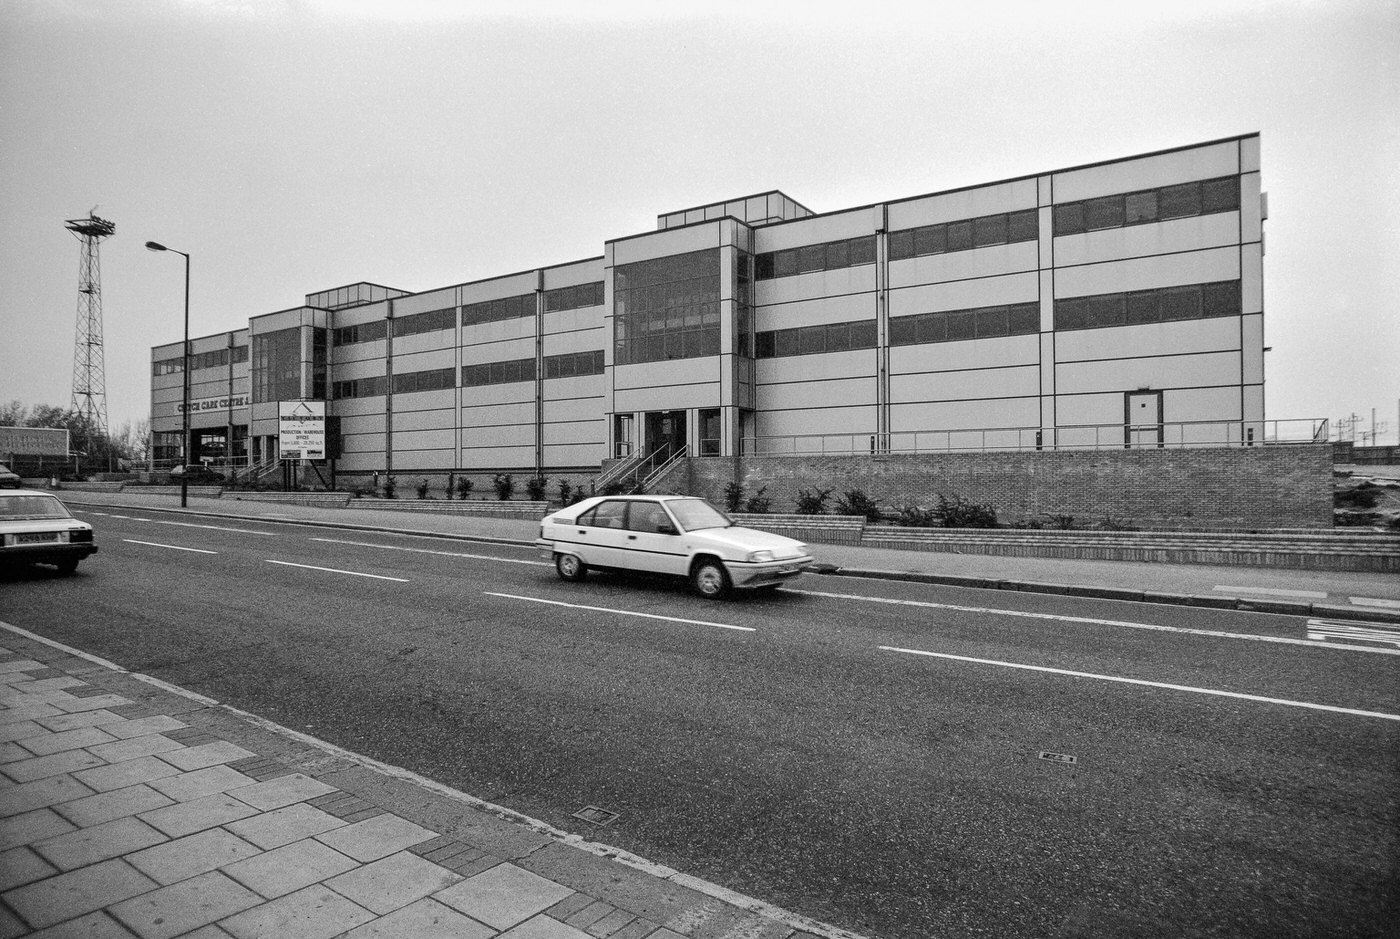 P M Fabrications, Beddington, Croydon, 1990s